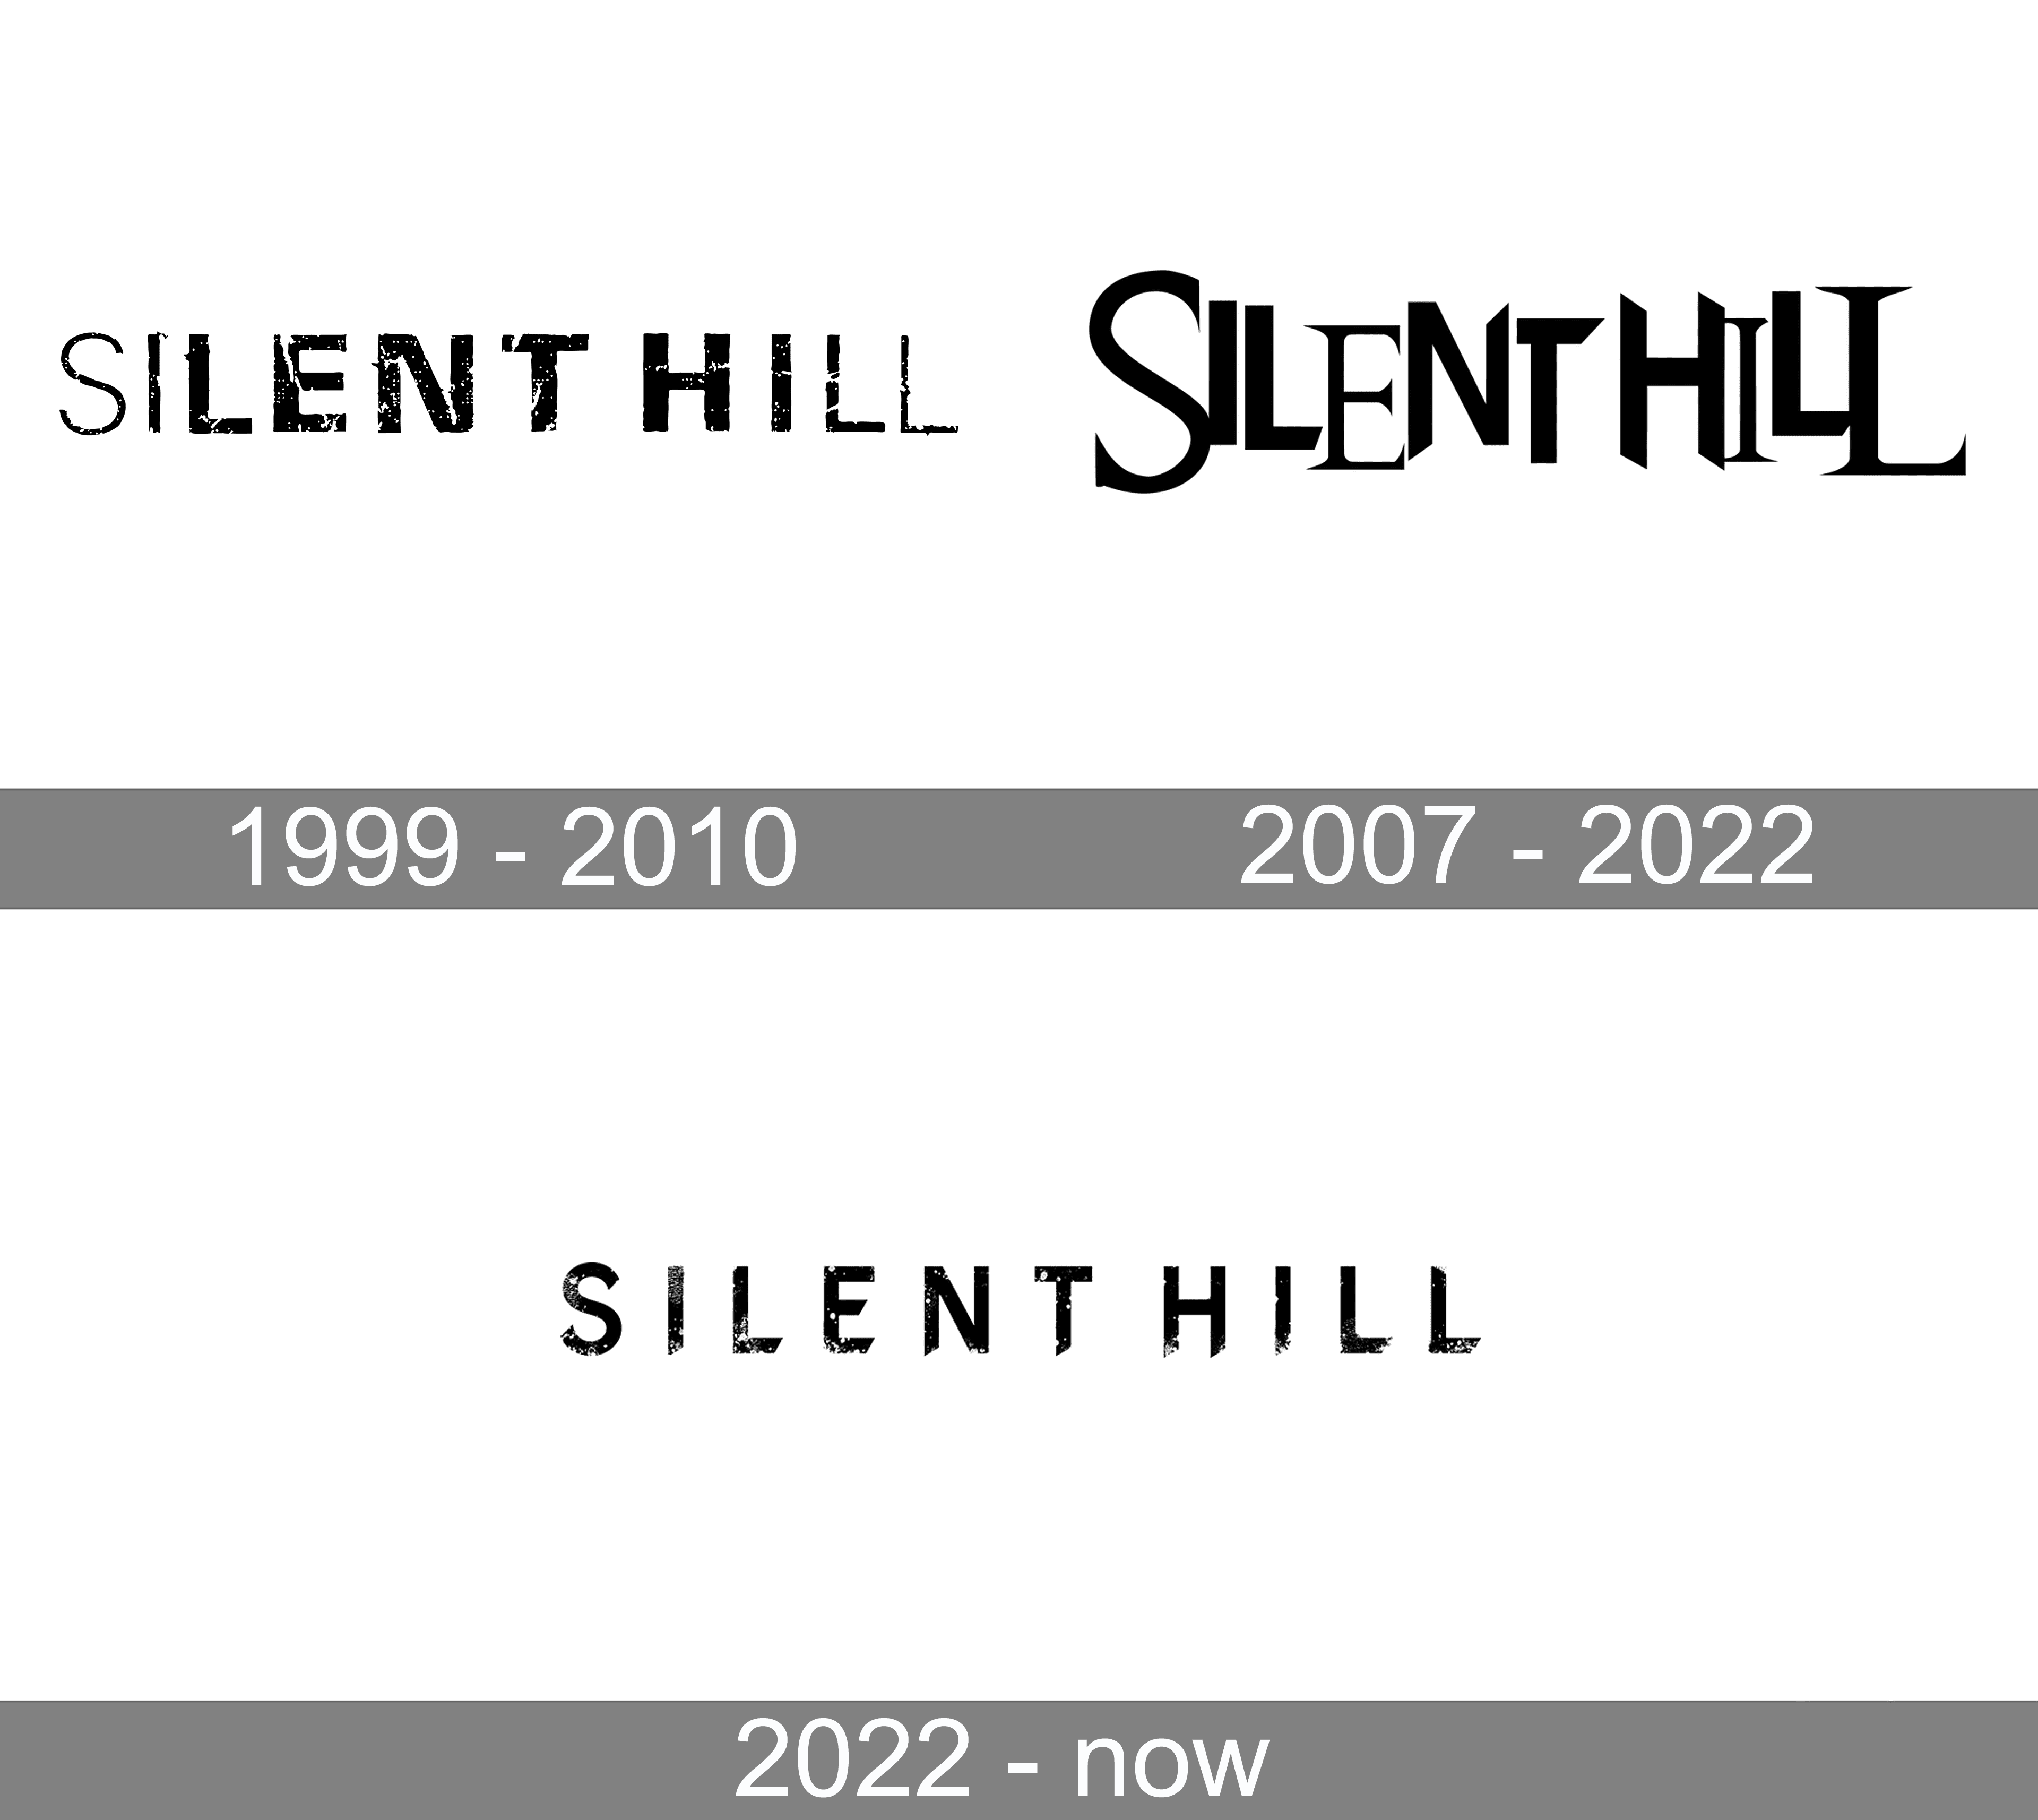 silent logo